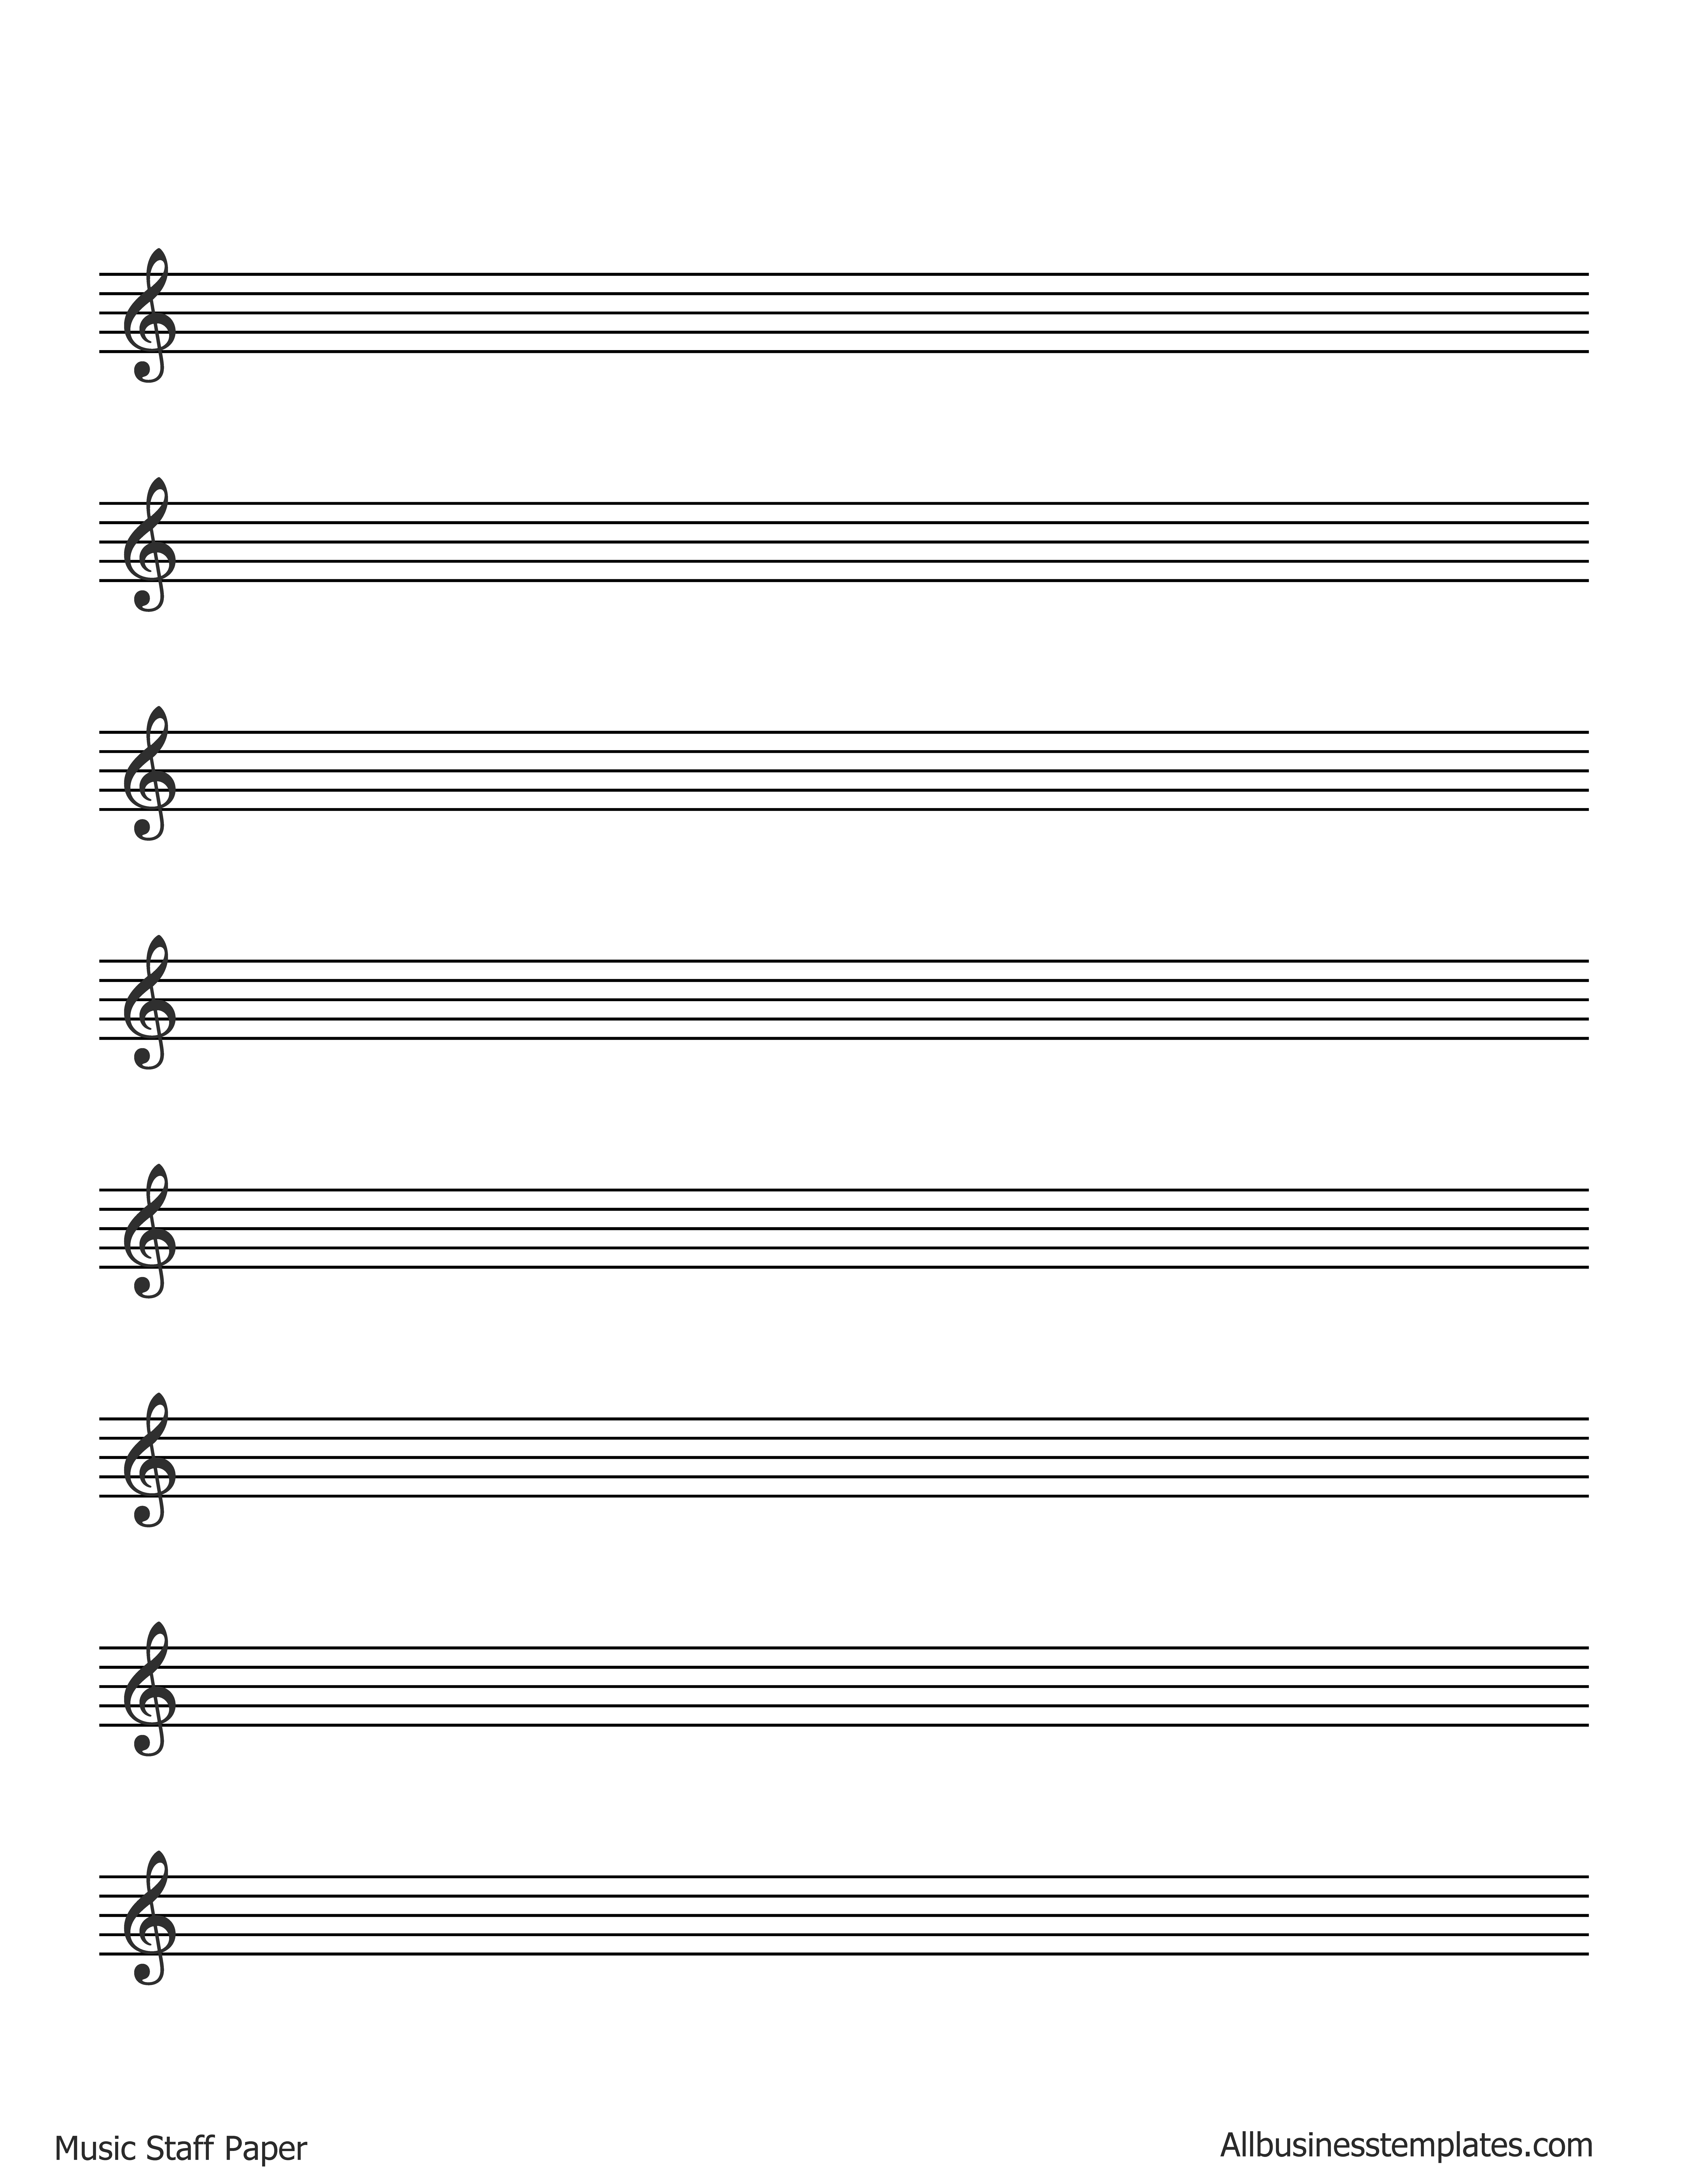 music staff paper template